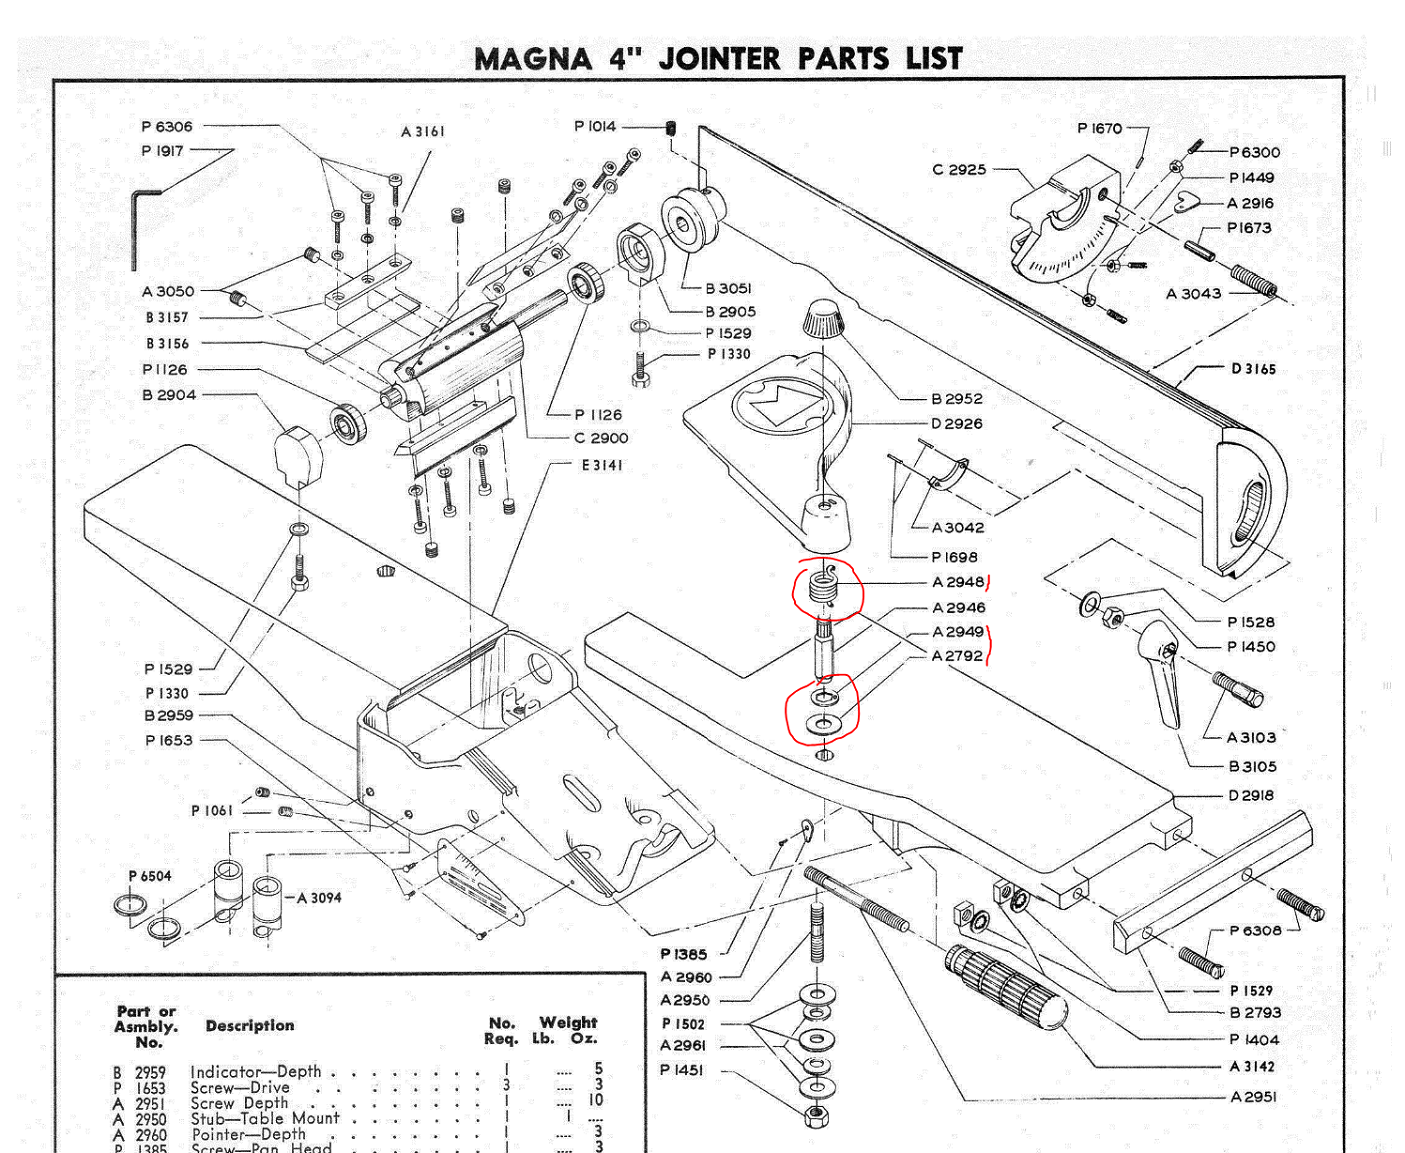 Jonter Parts List.PNG